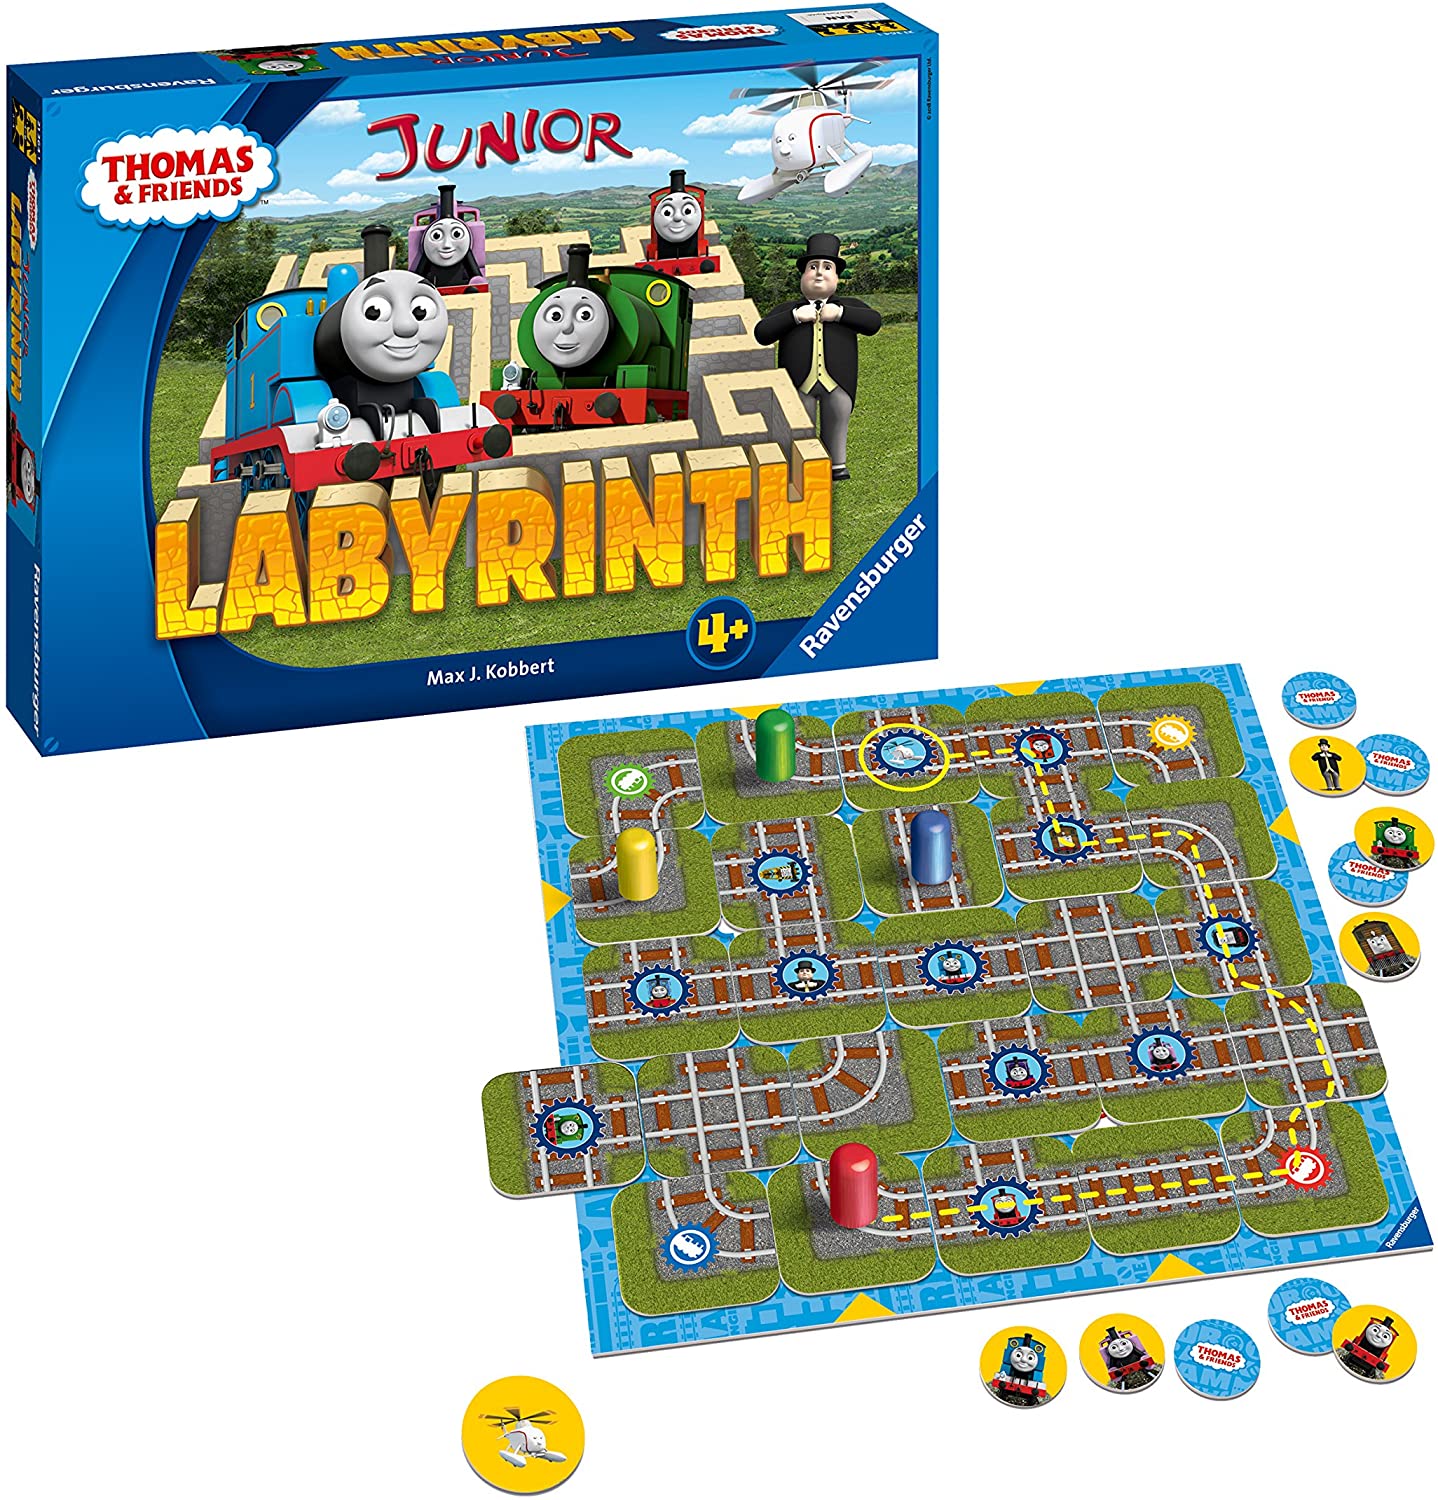 Ravensburger Thomas Labyrinth Game